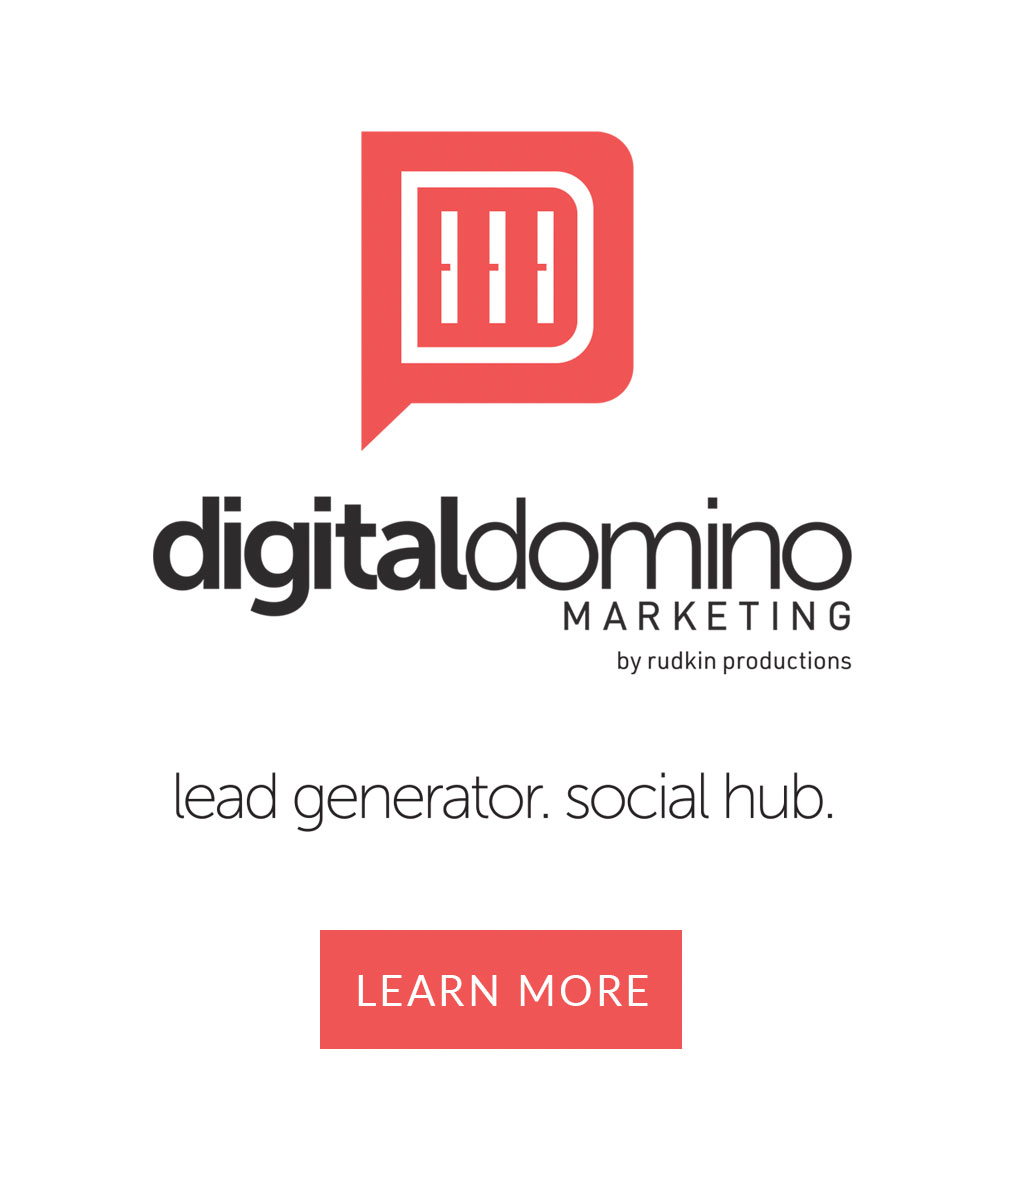 Digital Domino Marketing - lead generator, social hub